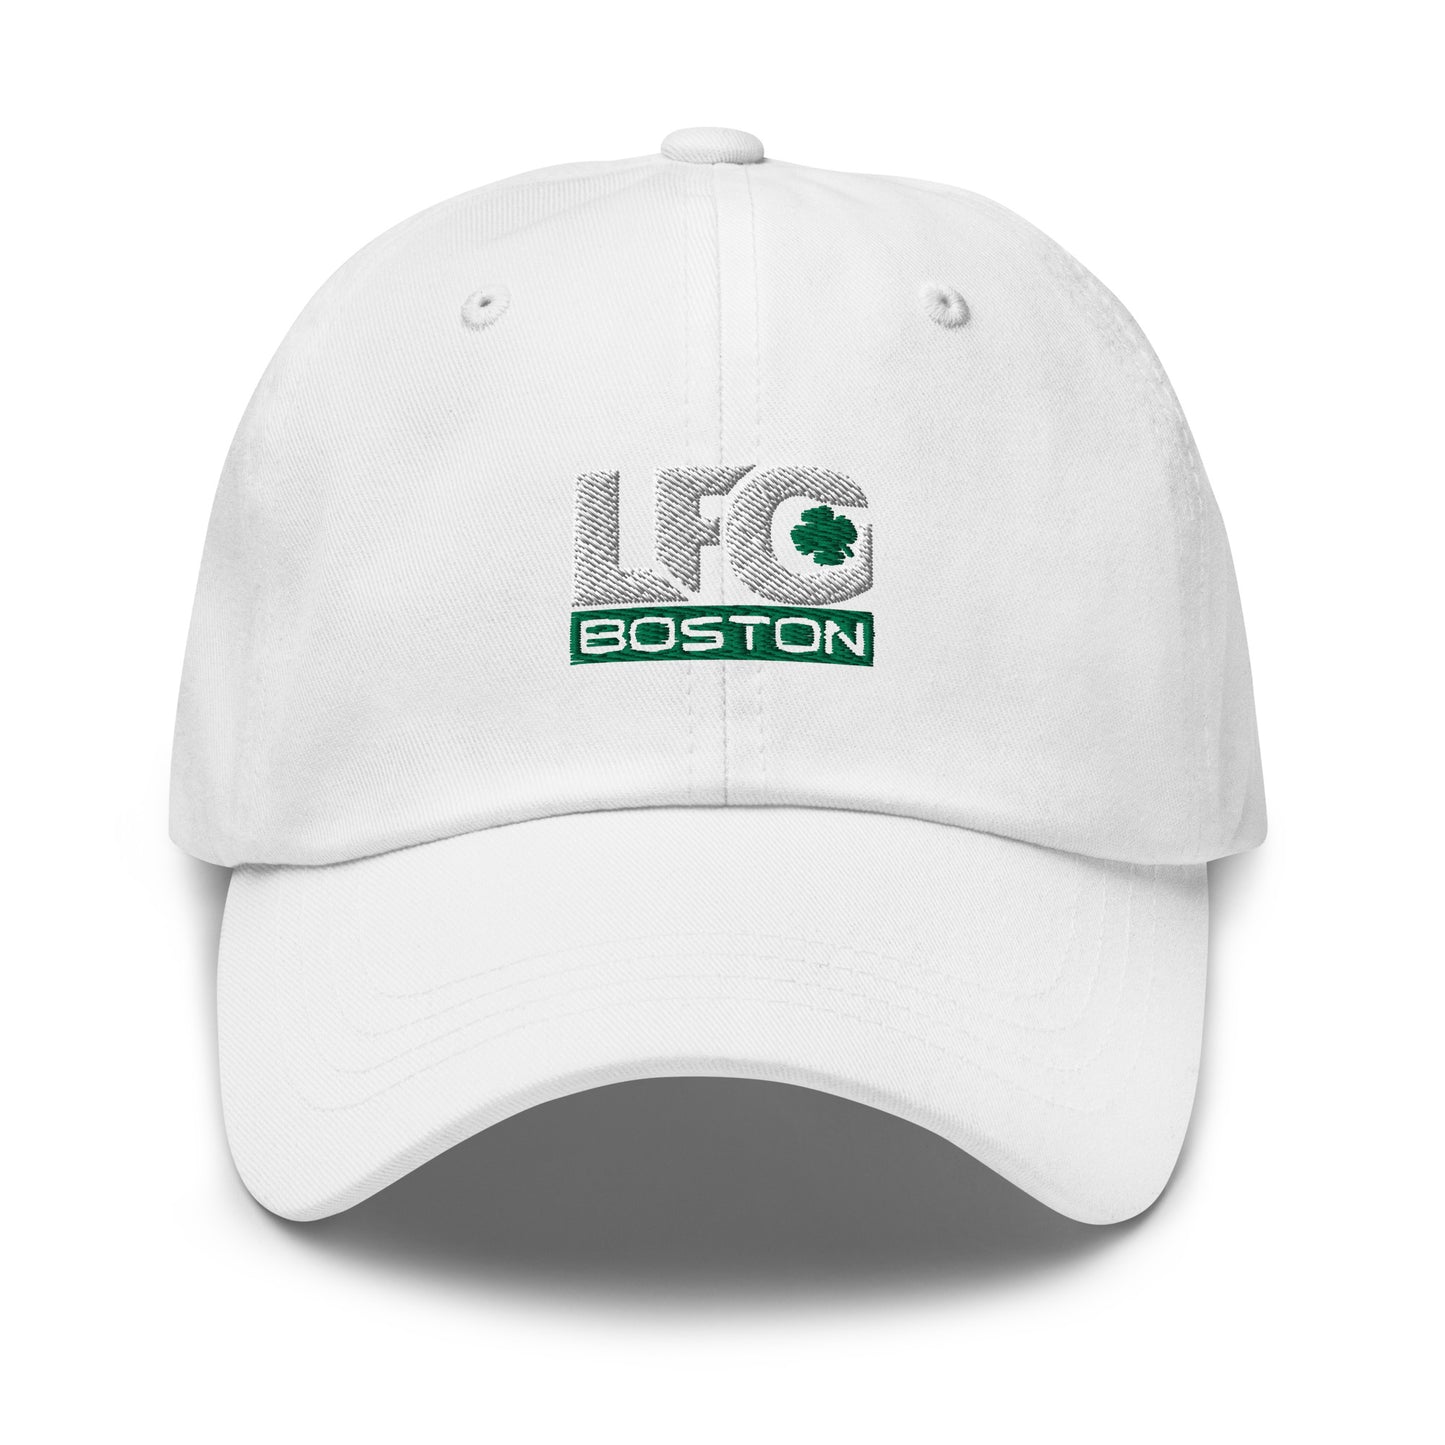 LFG Boston Basketball Hat